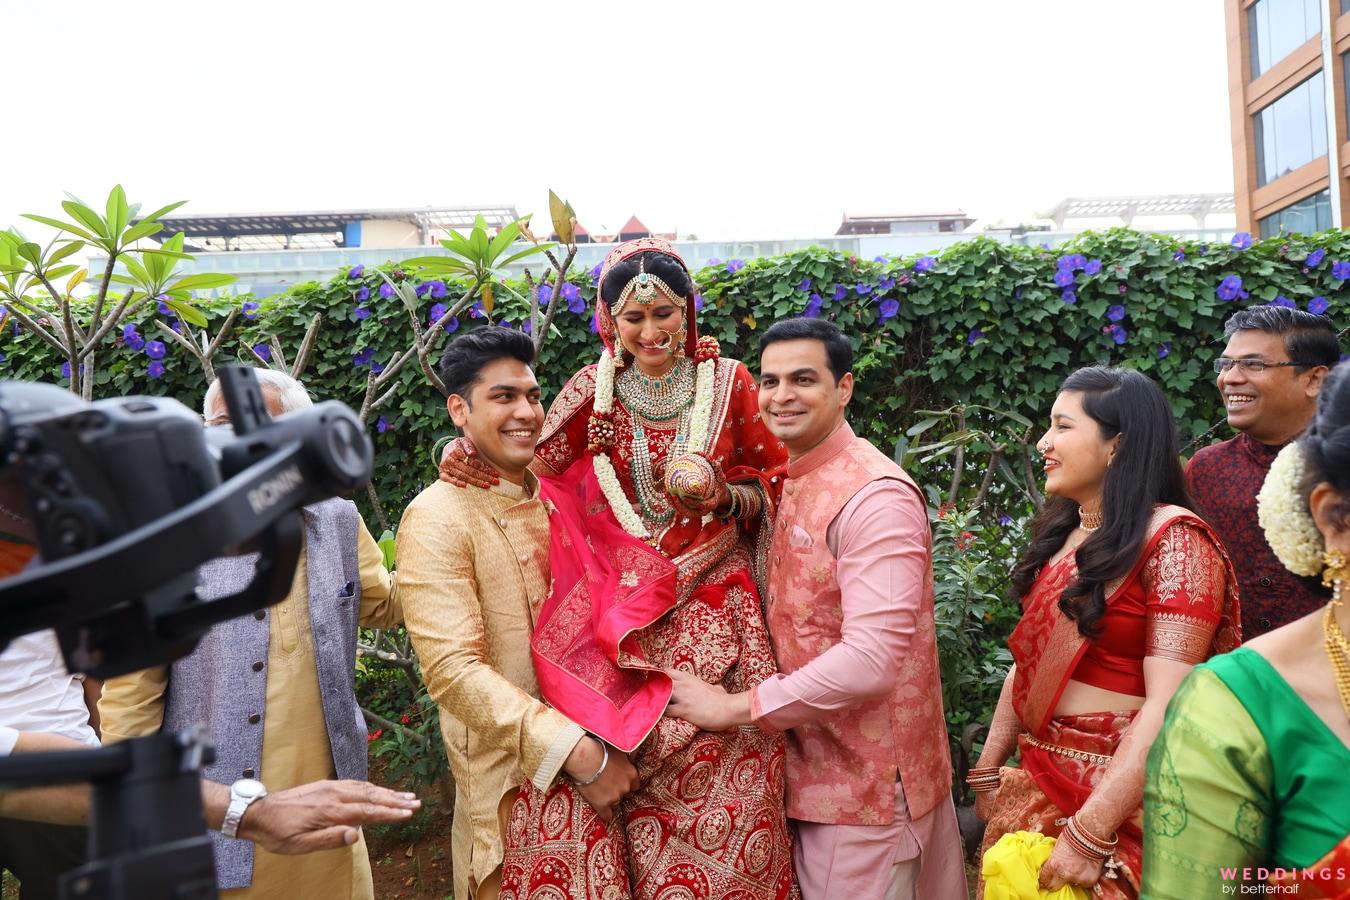 Wedding Photography Poses for Bride | Best Wedding Photographer India